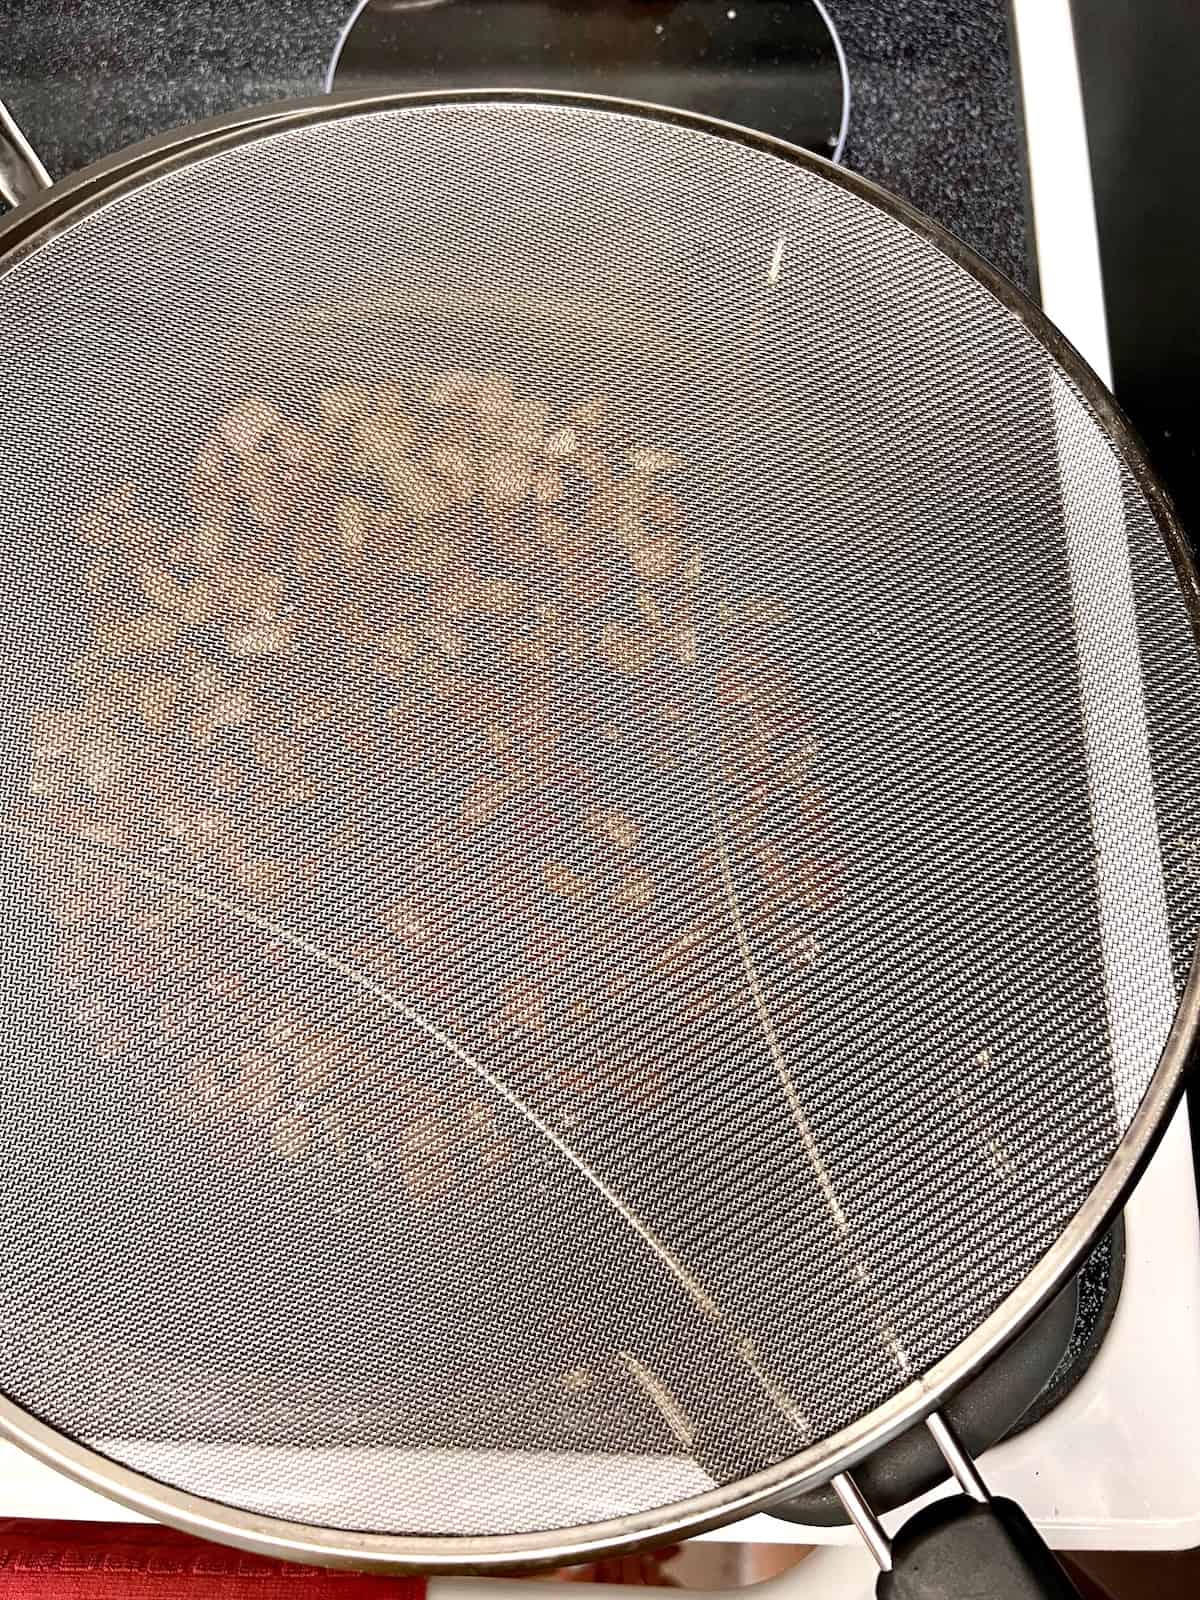 splatter screen over the pancetta cooking in a pan